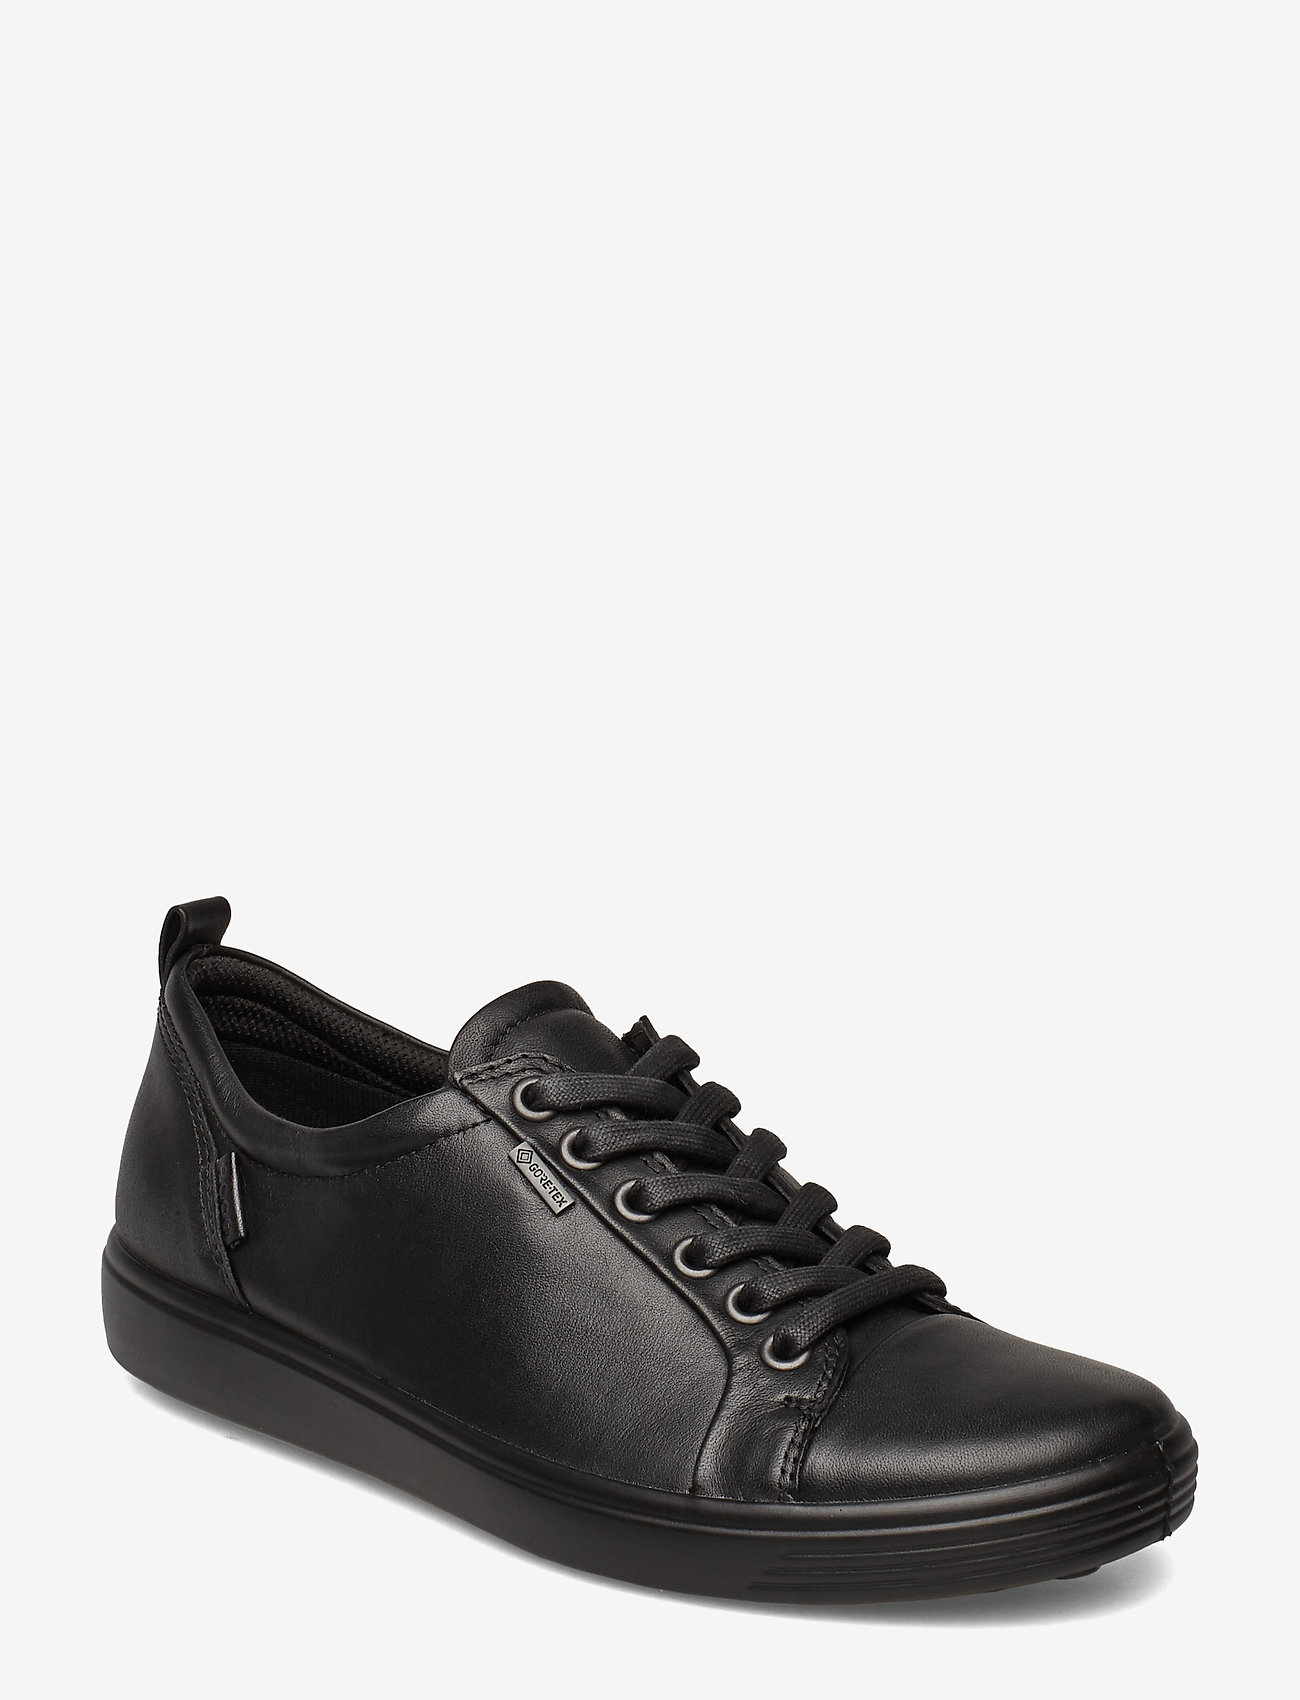 ECCO - SOFT 7 W - låga sneakers - black - 0